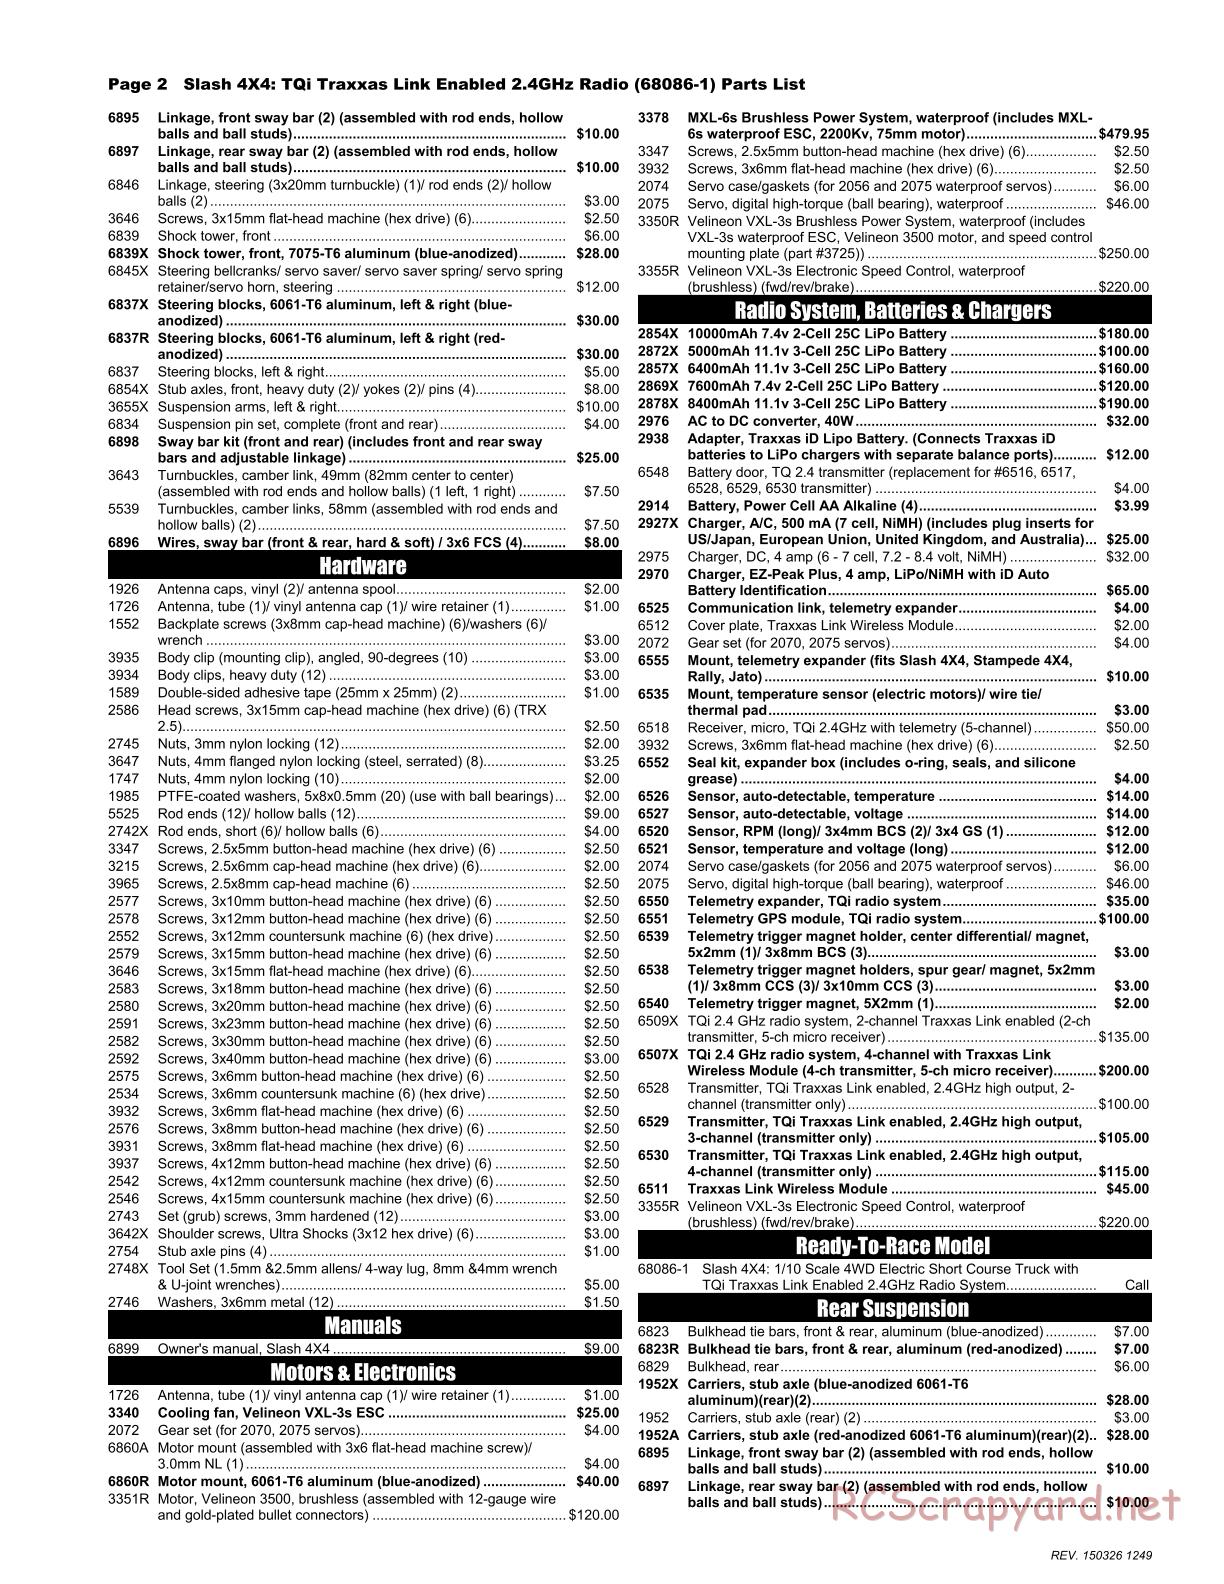 Traxxas - Slash 4x4 (2015) - Parts List - Page 2